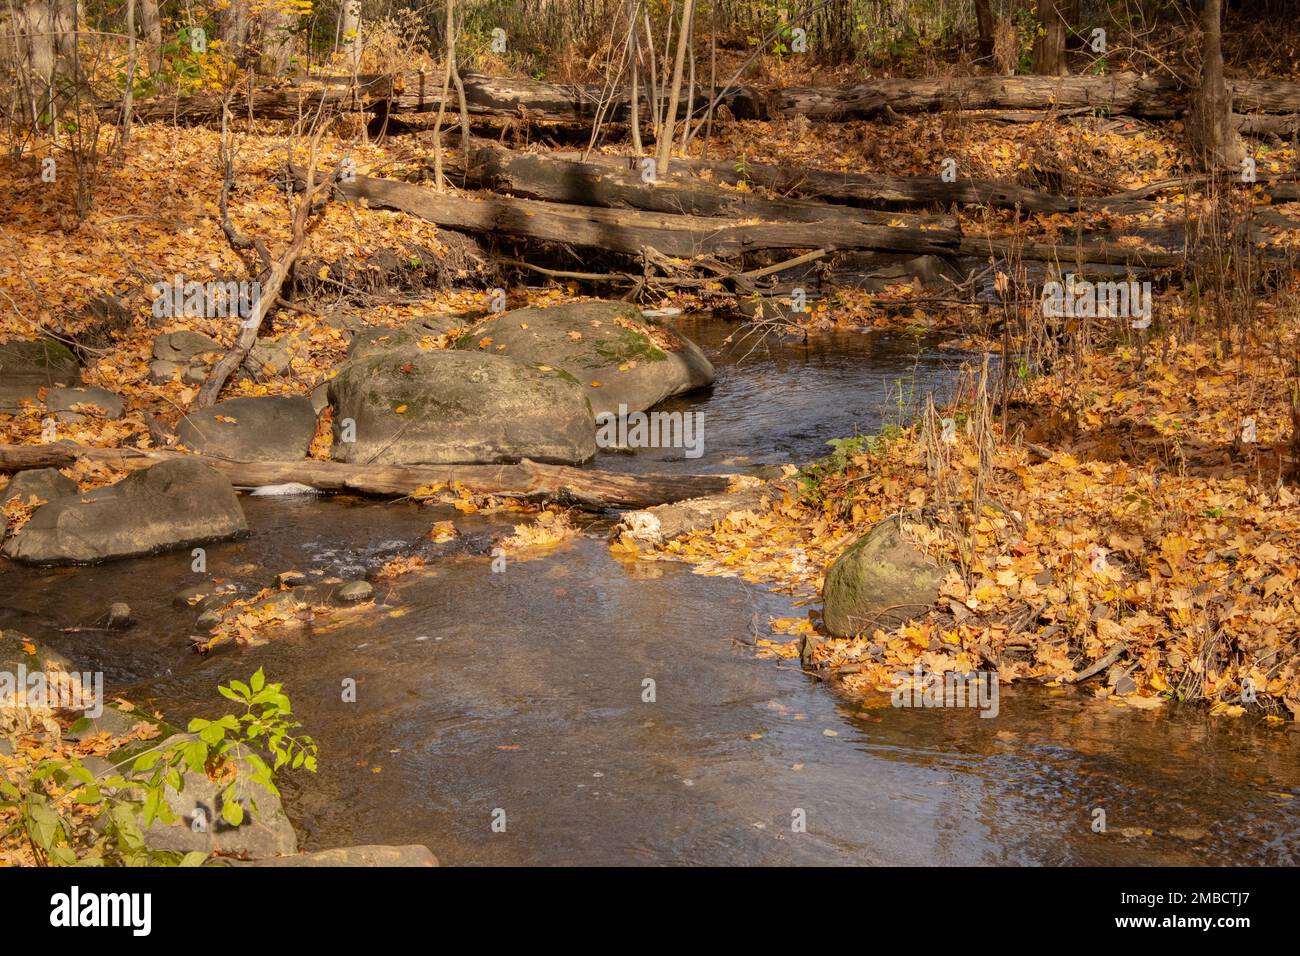 A stream cutting through woods in autumn. Stock Photo